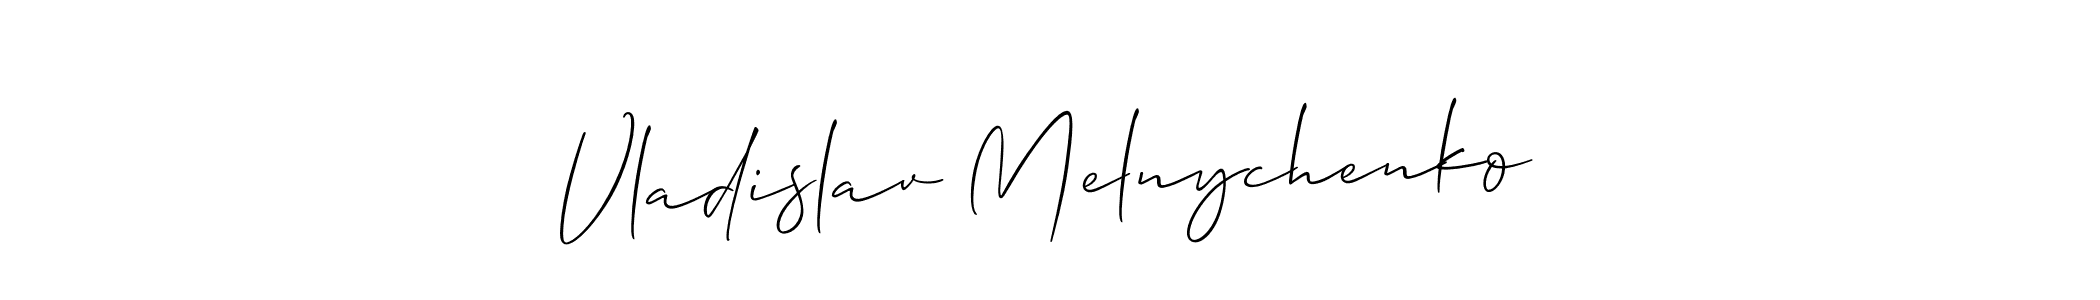 How to Draw Vladislav Melnychenko signature style? Allison_Script is a latest design signature styles for name Vladislav Melnychenko. Vladislav Melnychenko signature style 2 images and pictures png